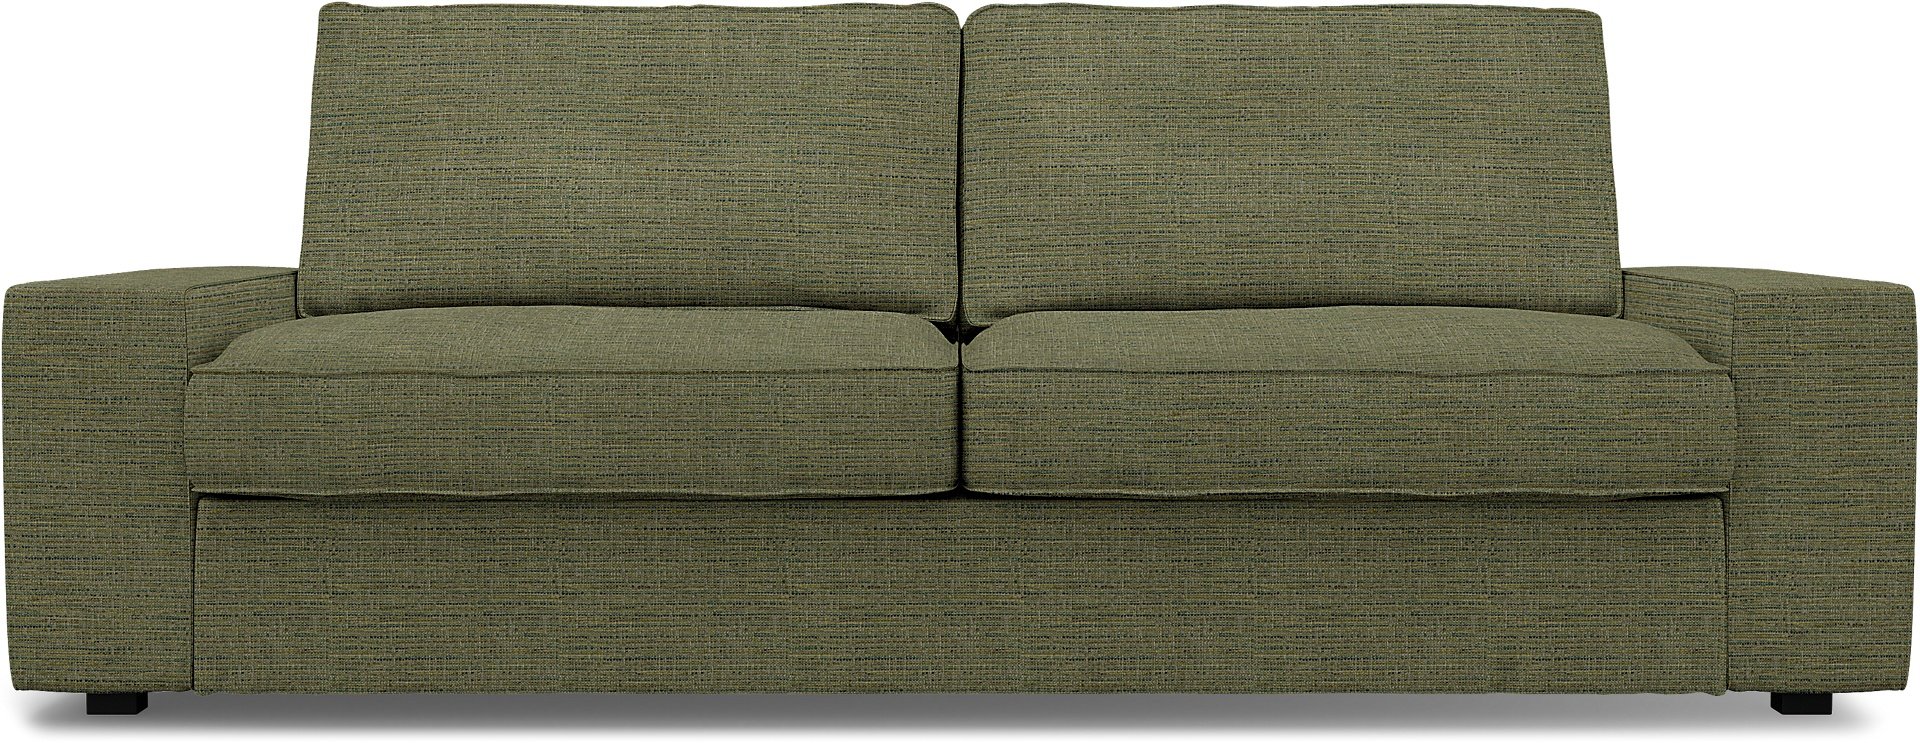 IKEA - Kivik 3 Seater Sofa Cover, Meadow Green, Boucle & Texture - Bemz